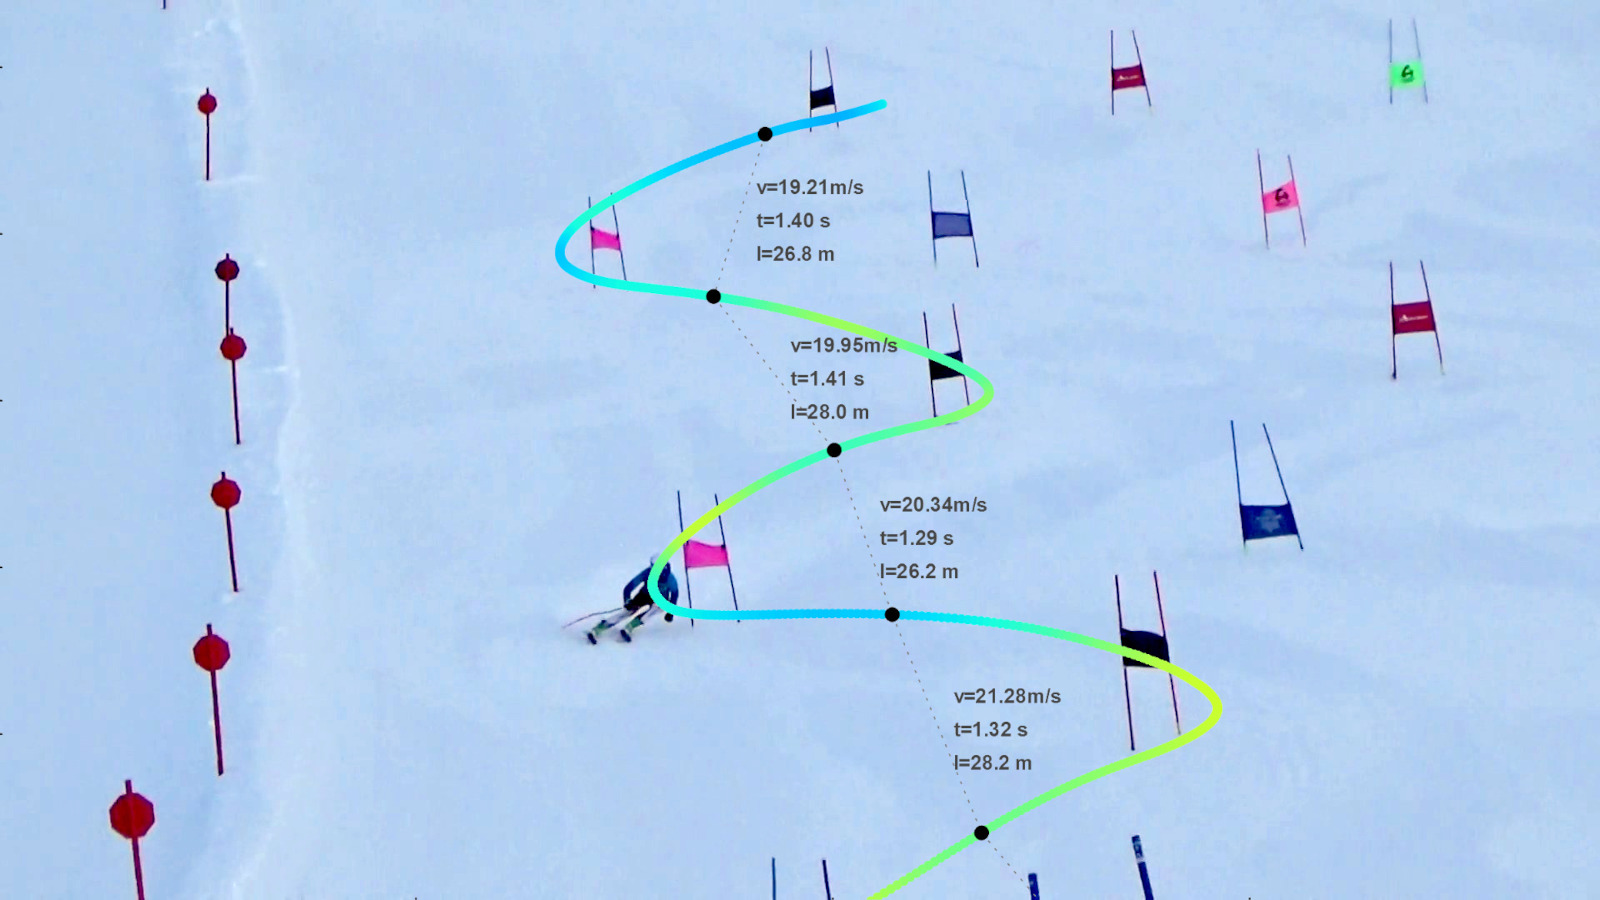 Alpine skiing line analysis